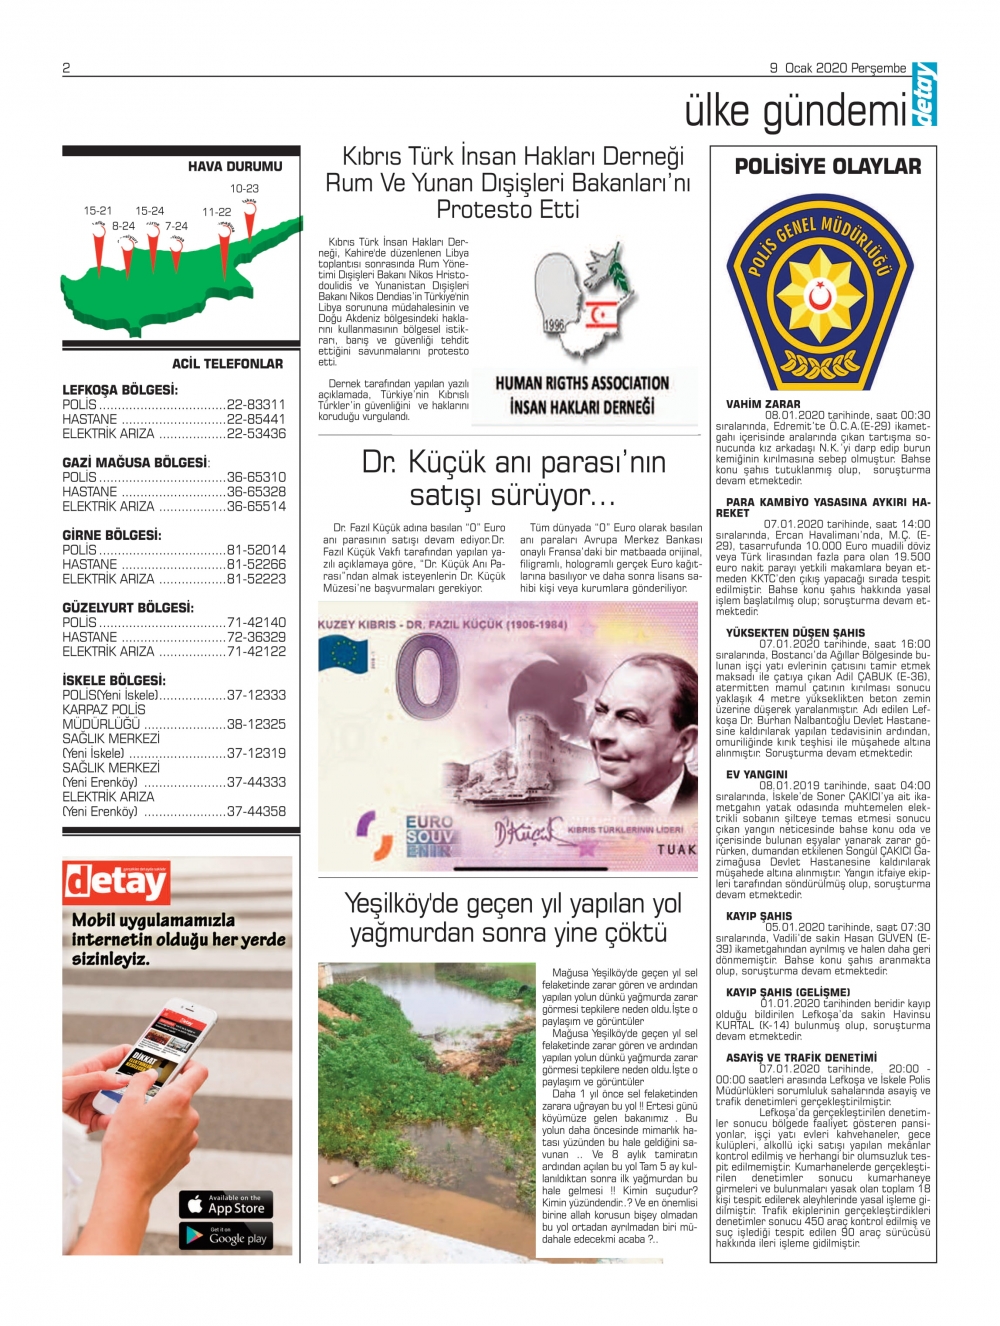 Detay Gazetes 10 Ocak 2020 galerisi resim 2